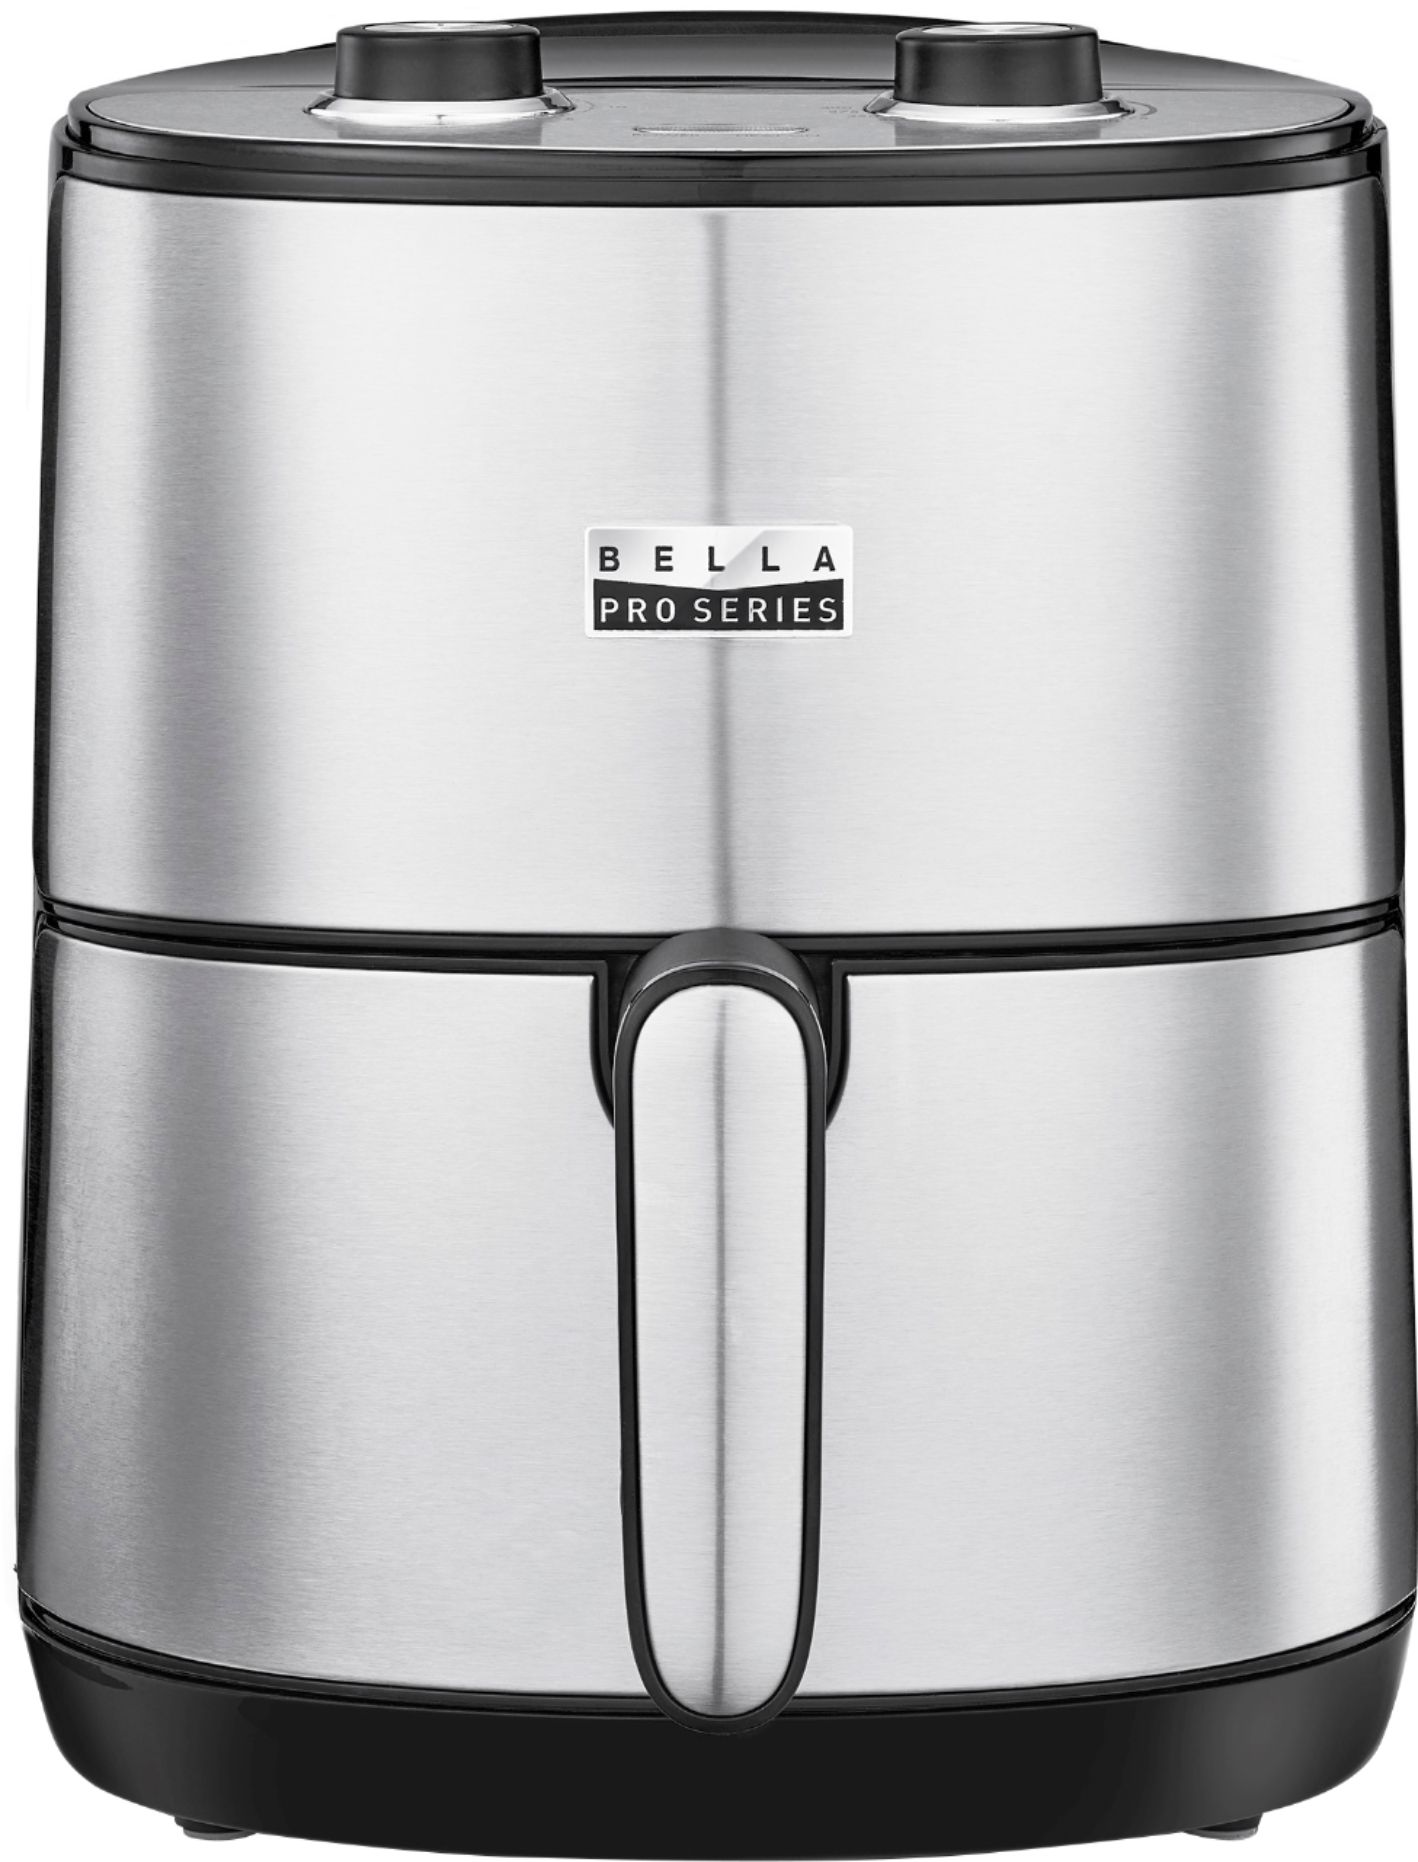 Bella Pro Series Air Fryer - appliances - by owner - sale - craigslist